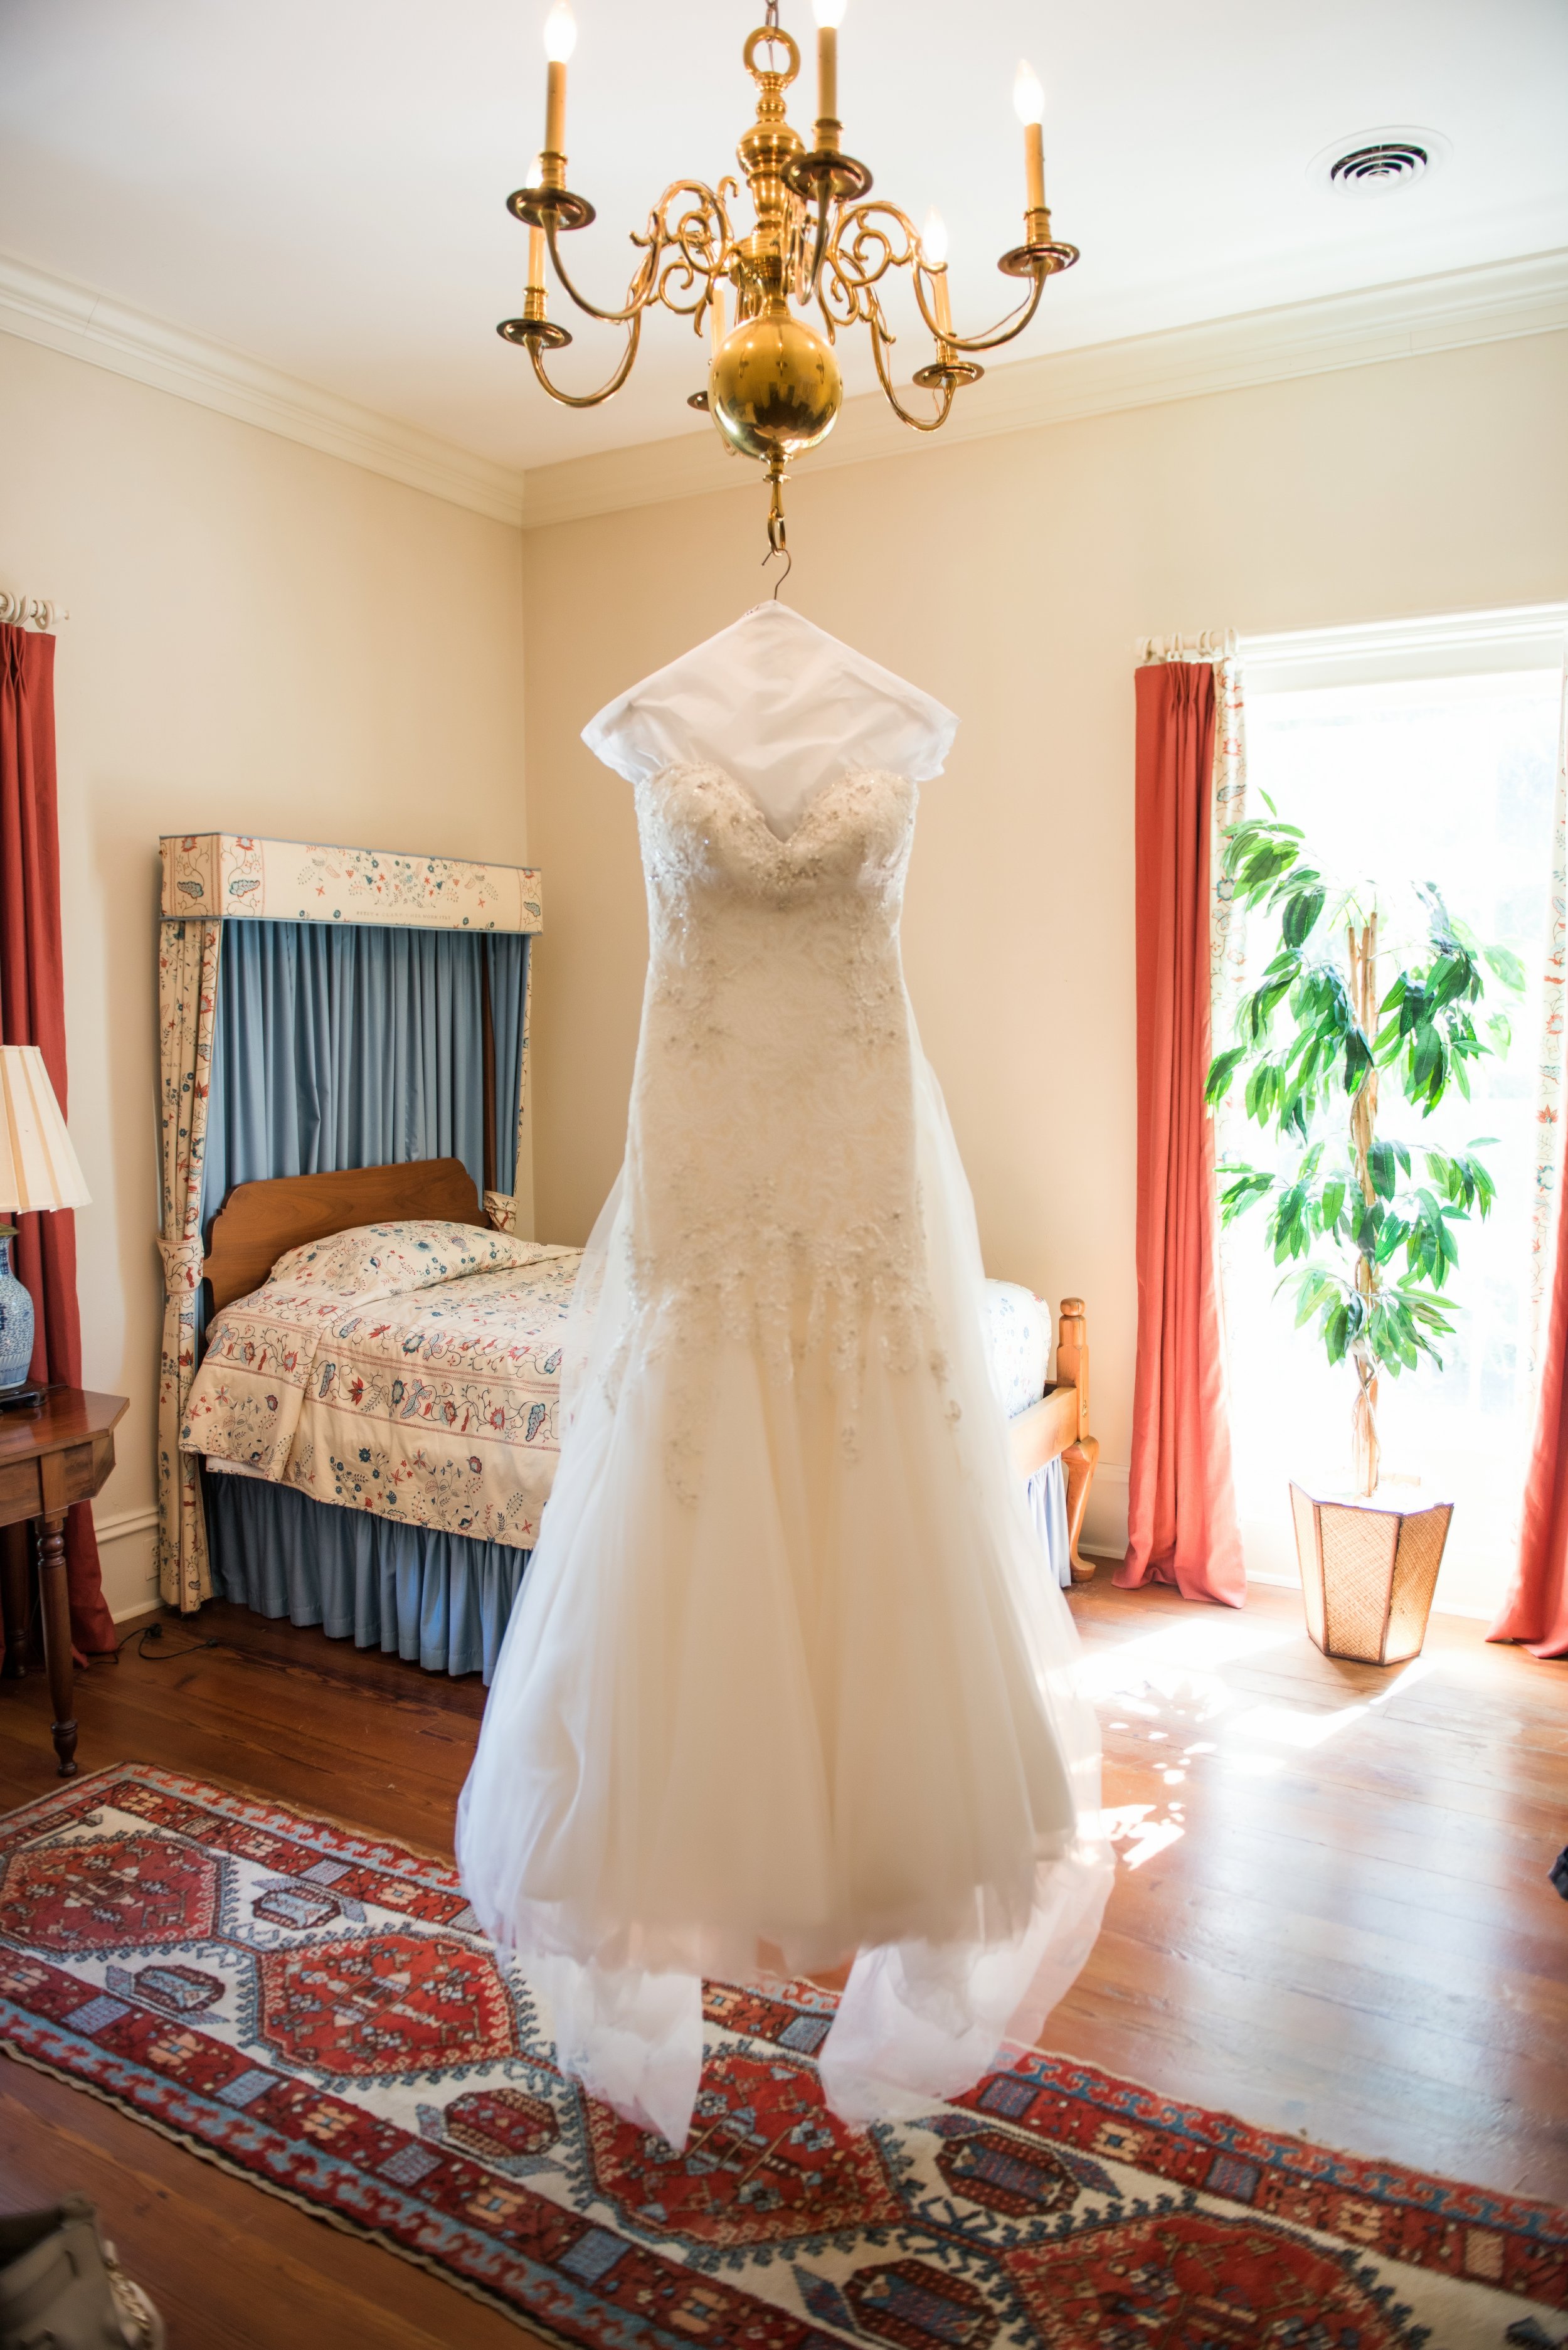 A Nashville, North Carolina Plantation Wedding - The Overwhelmed Bride Wedding Blog